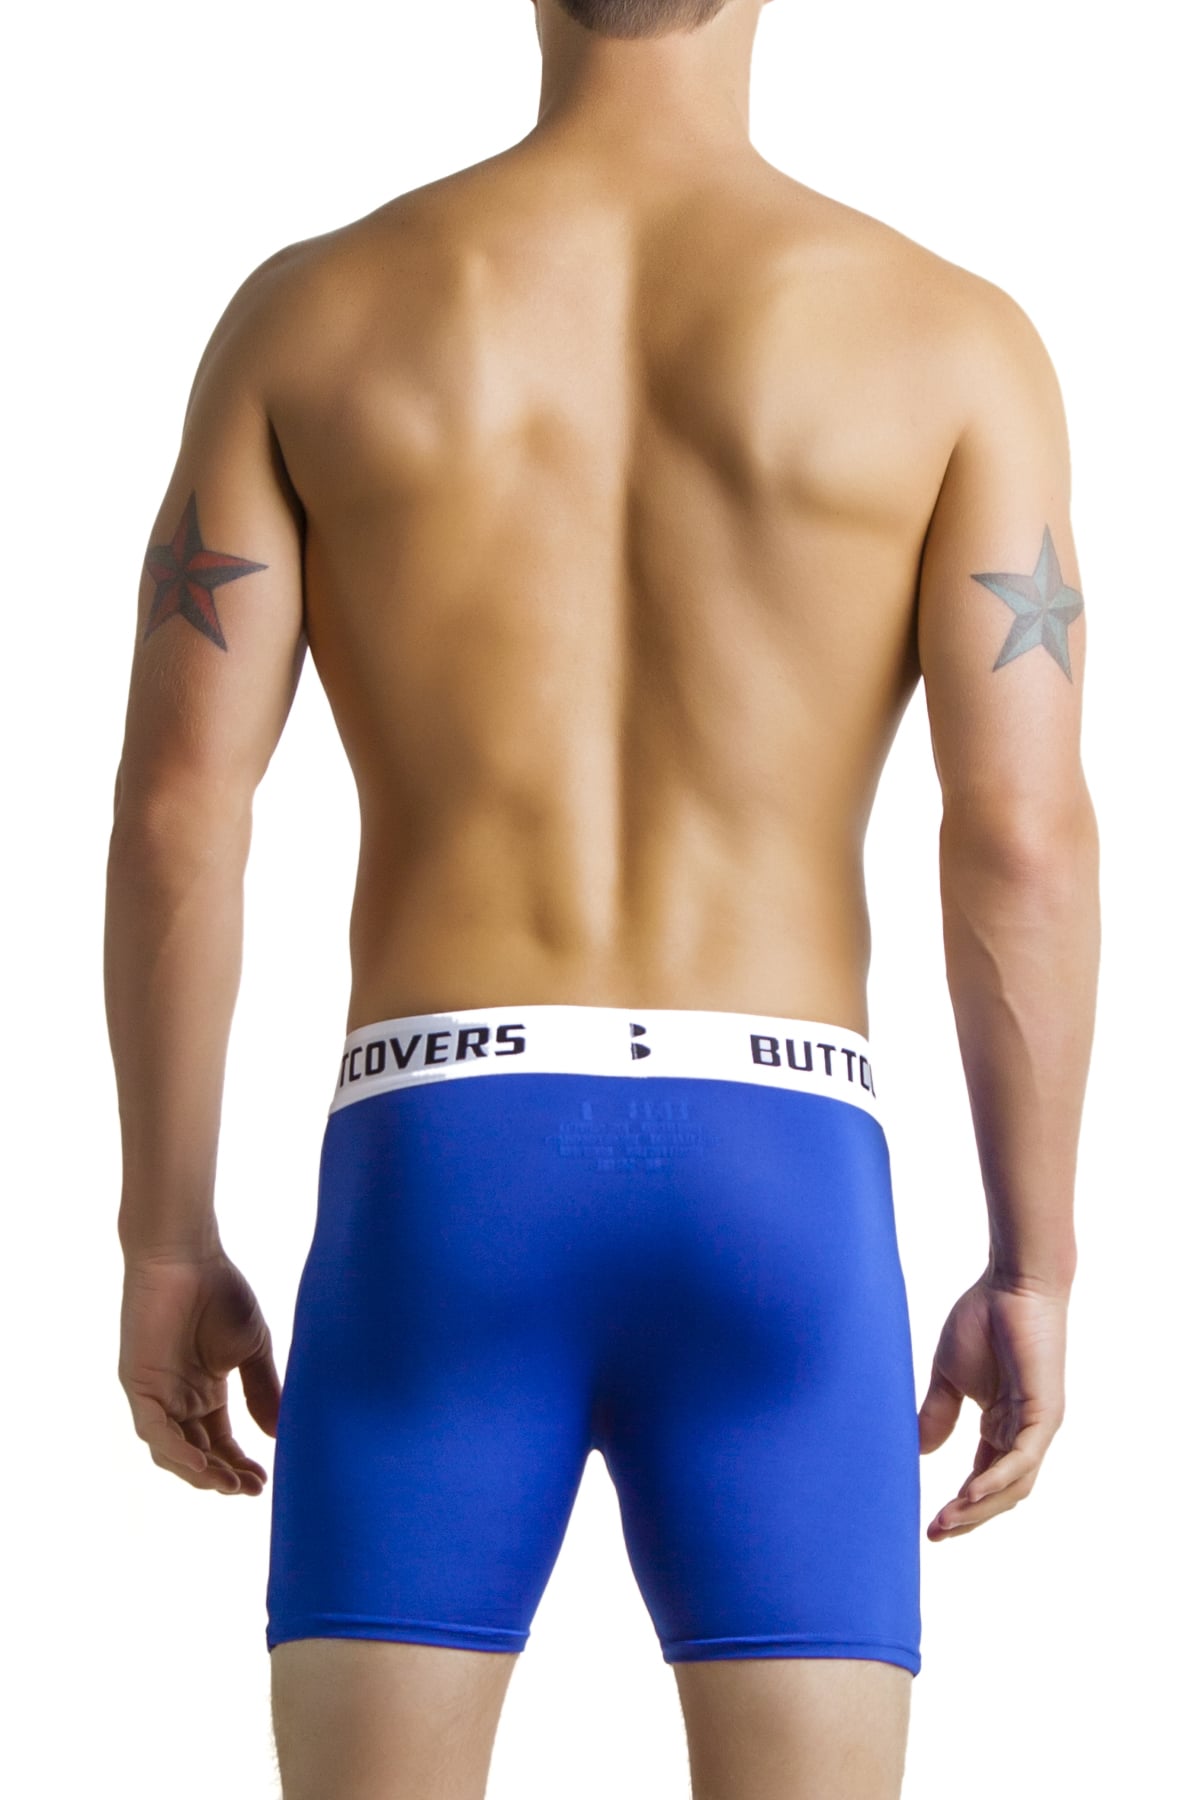 Buttcovers Aquatic Blue Boxer Brief